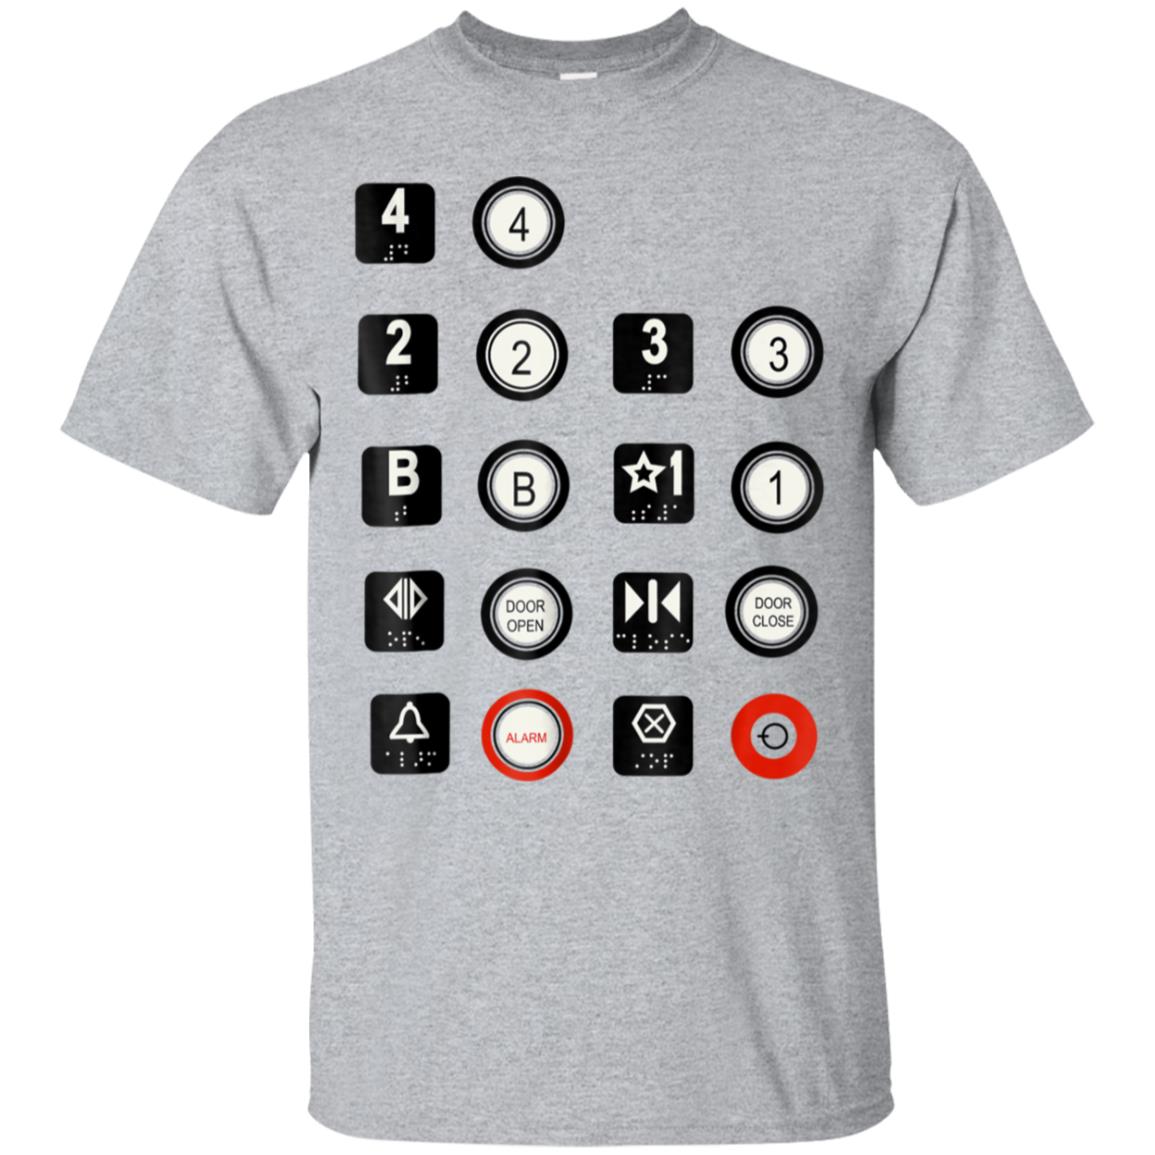 Elevator T-Shirt Elevator Buttons